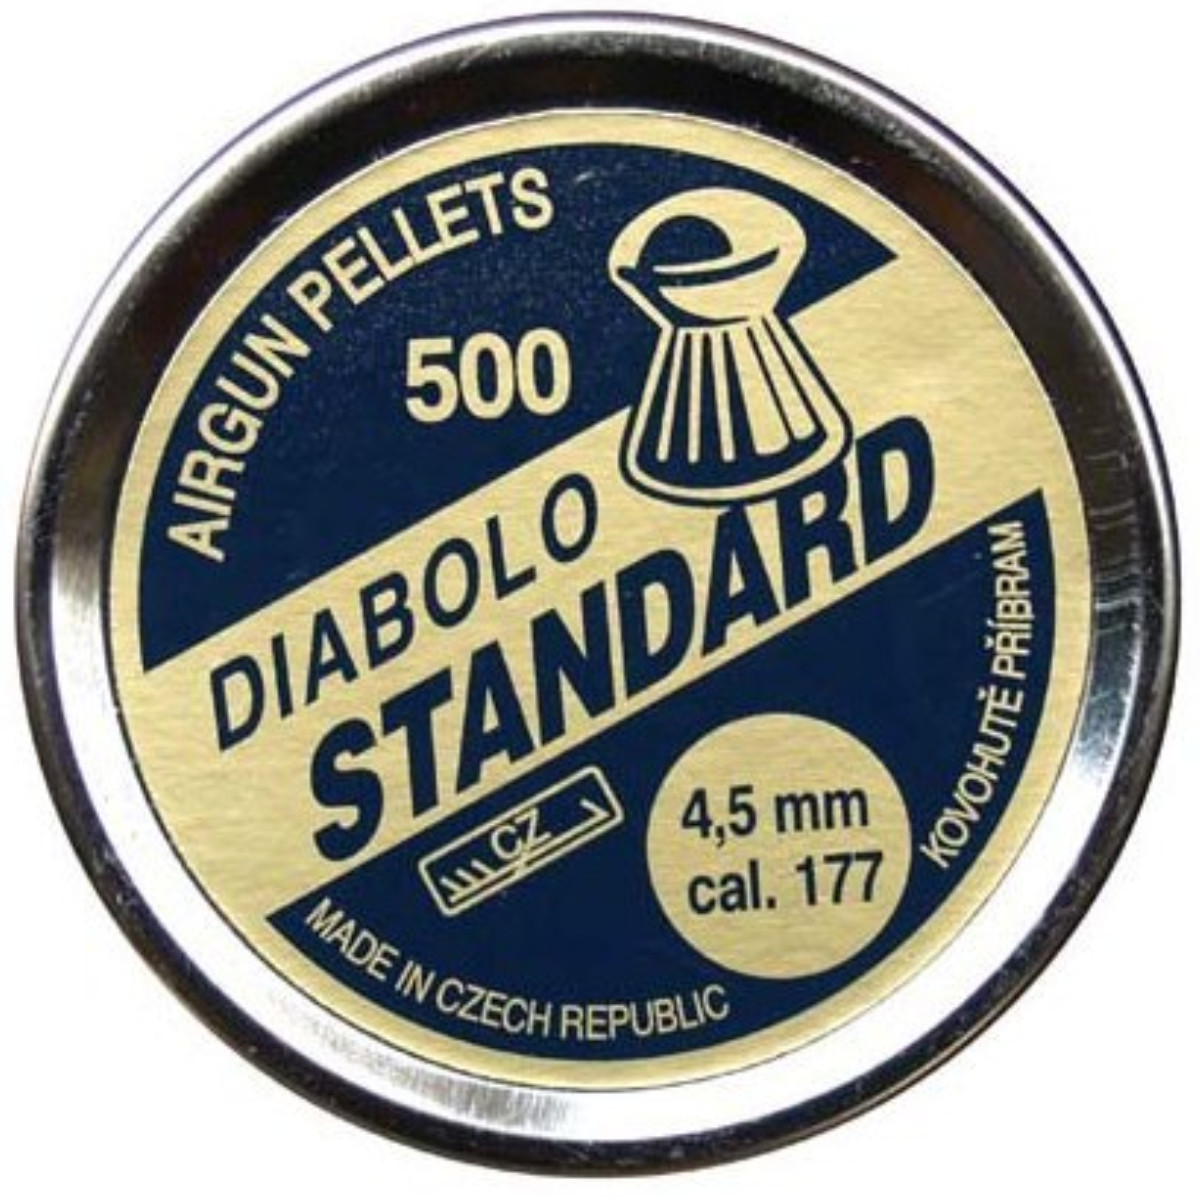 Diabolky-Standard